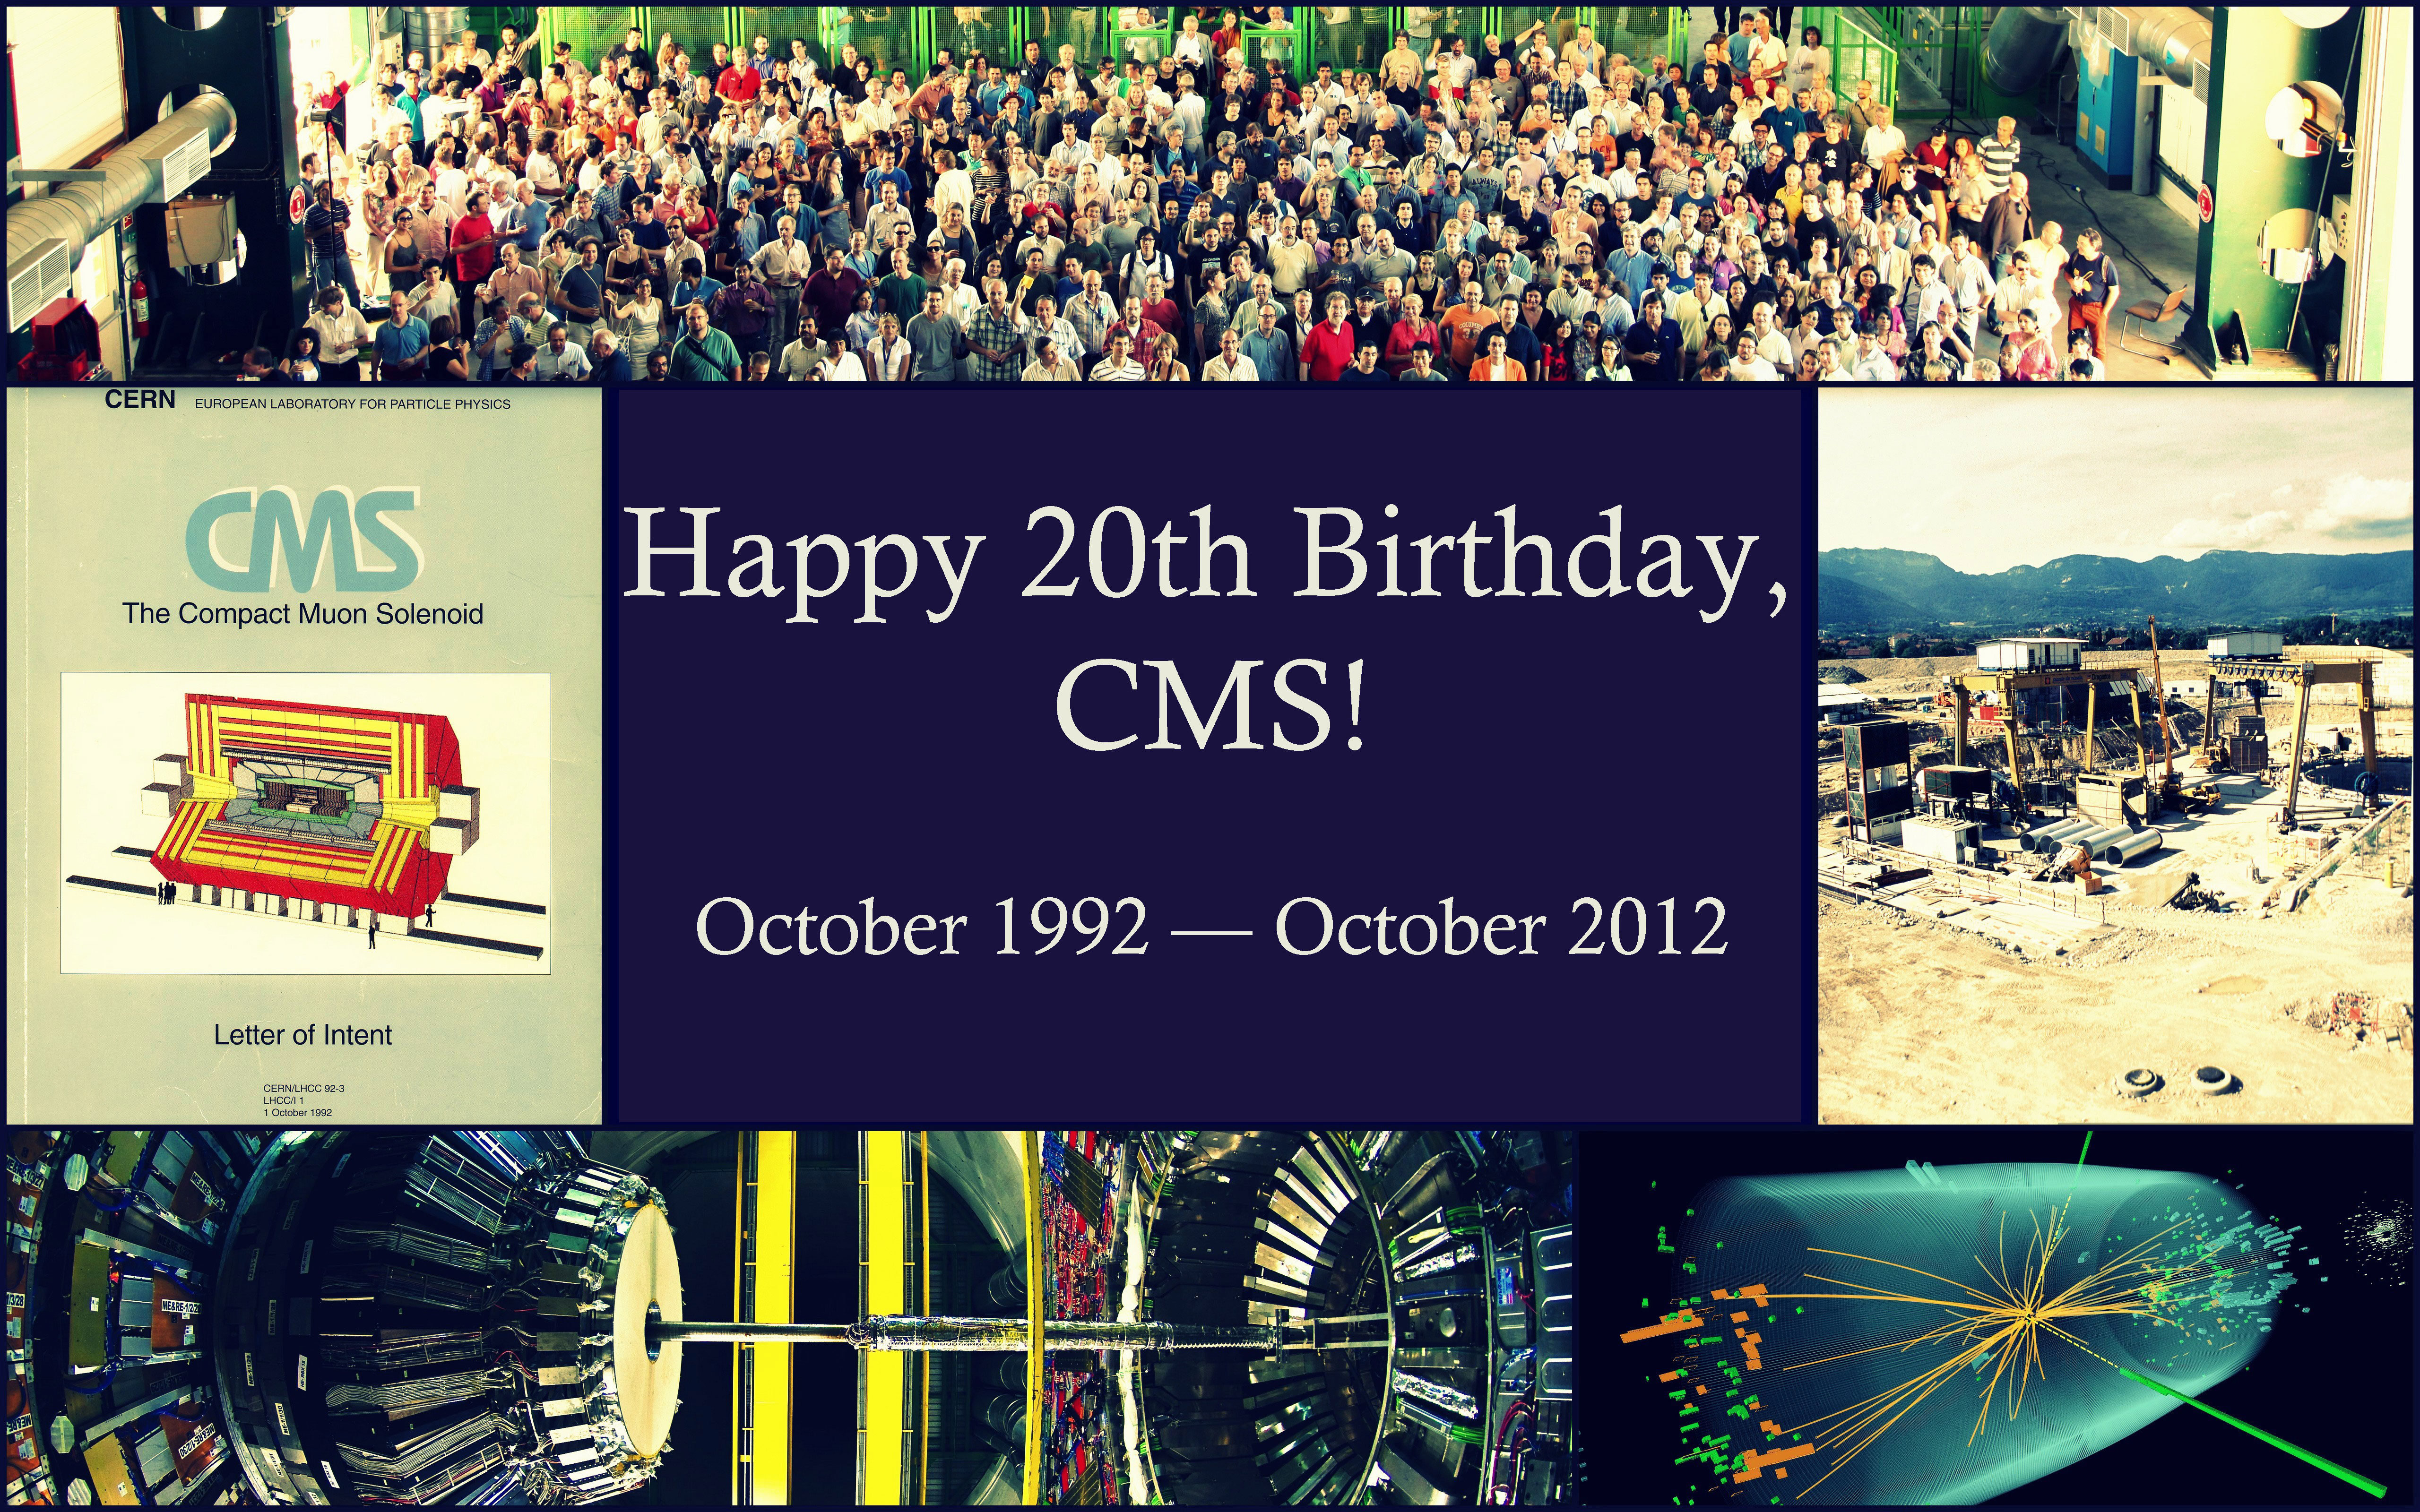 Happy birthday, CMS!